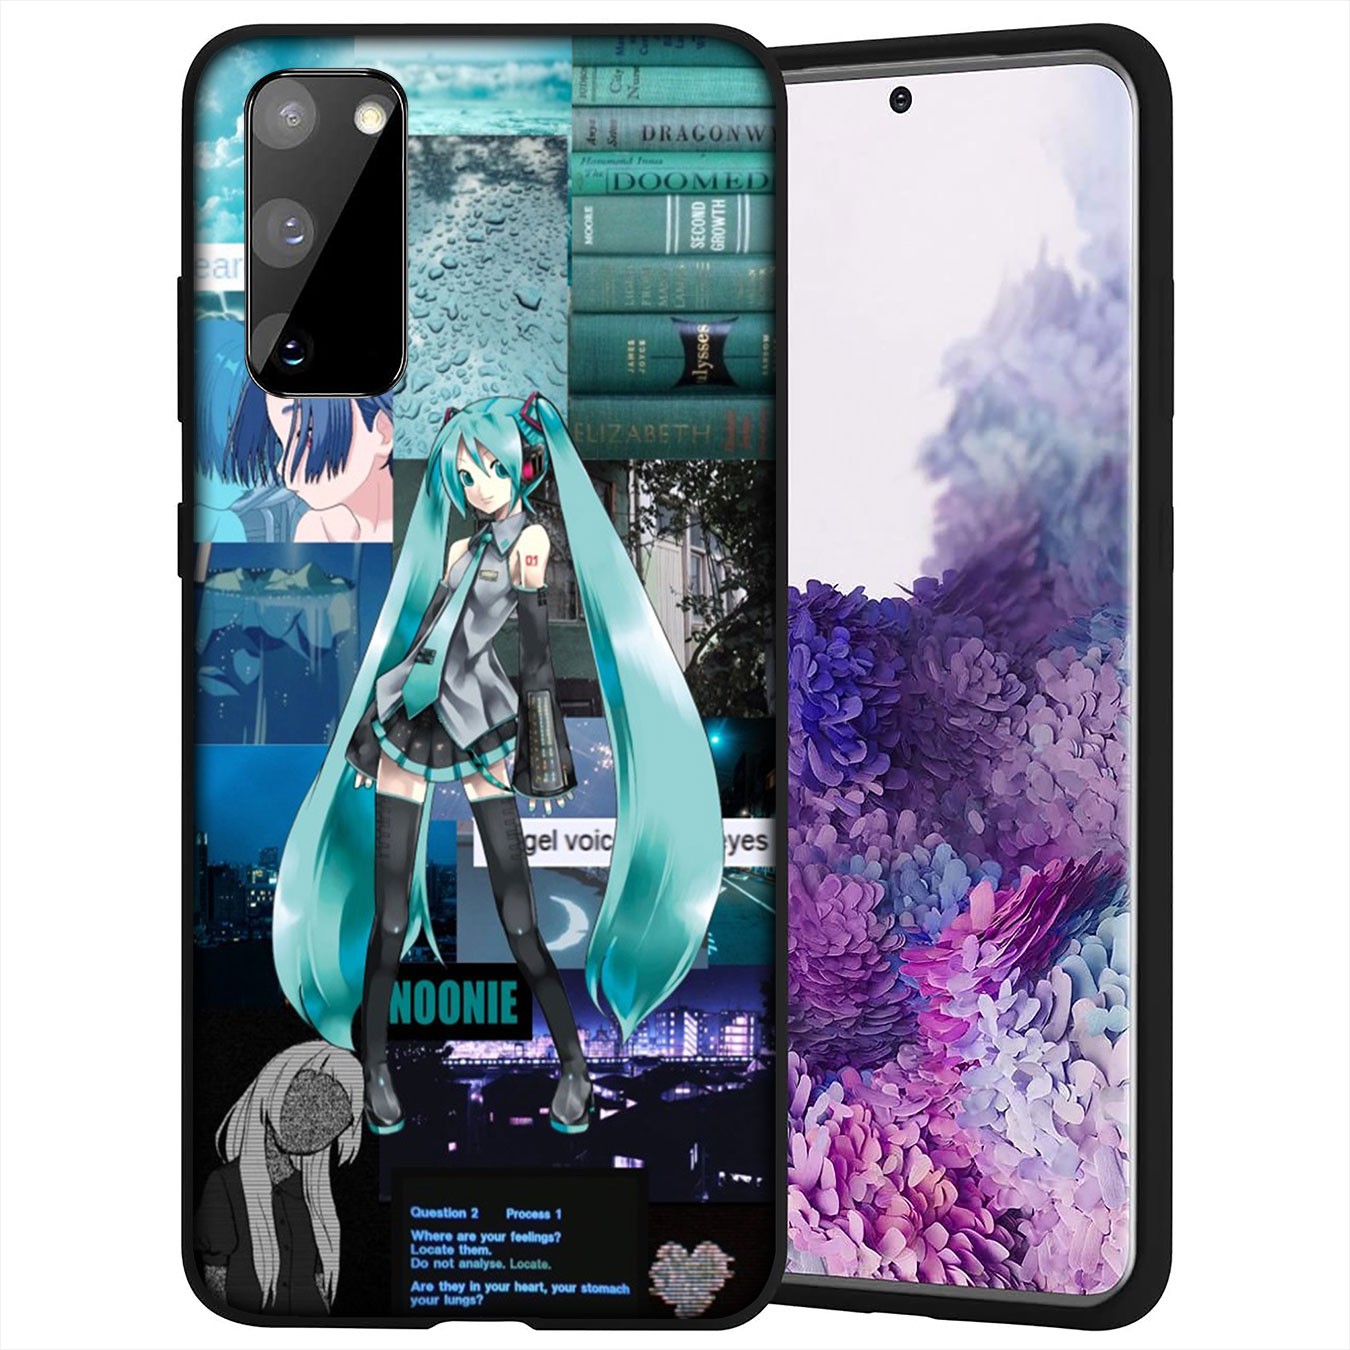 Samsung Galaxy A9 A8 A7 A6 Plus J8 2018 + A21S A70 M20 A6+ A8+ 6Plus Casing Soft Silicone Cartoon hatsune miku girl Phone Case